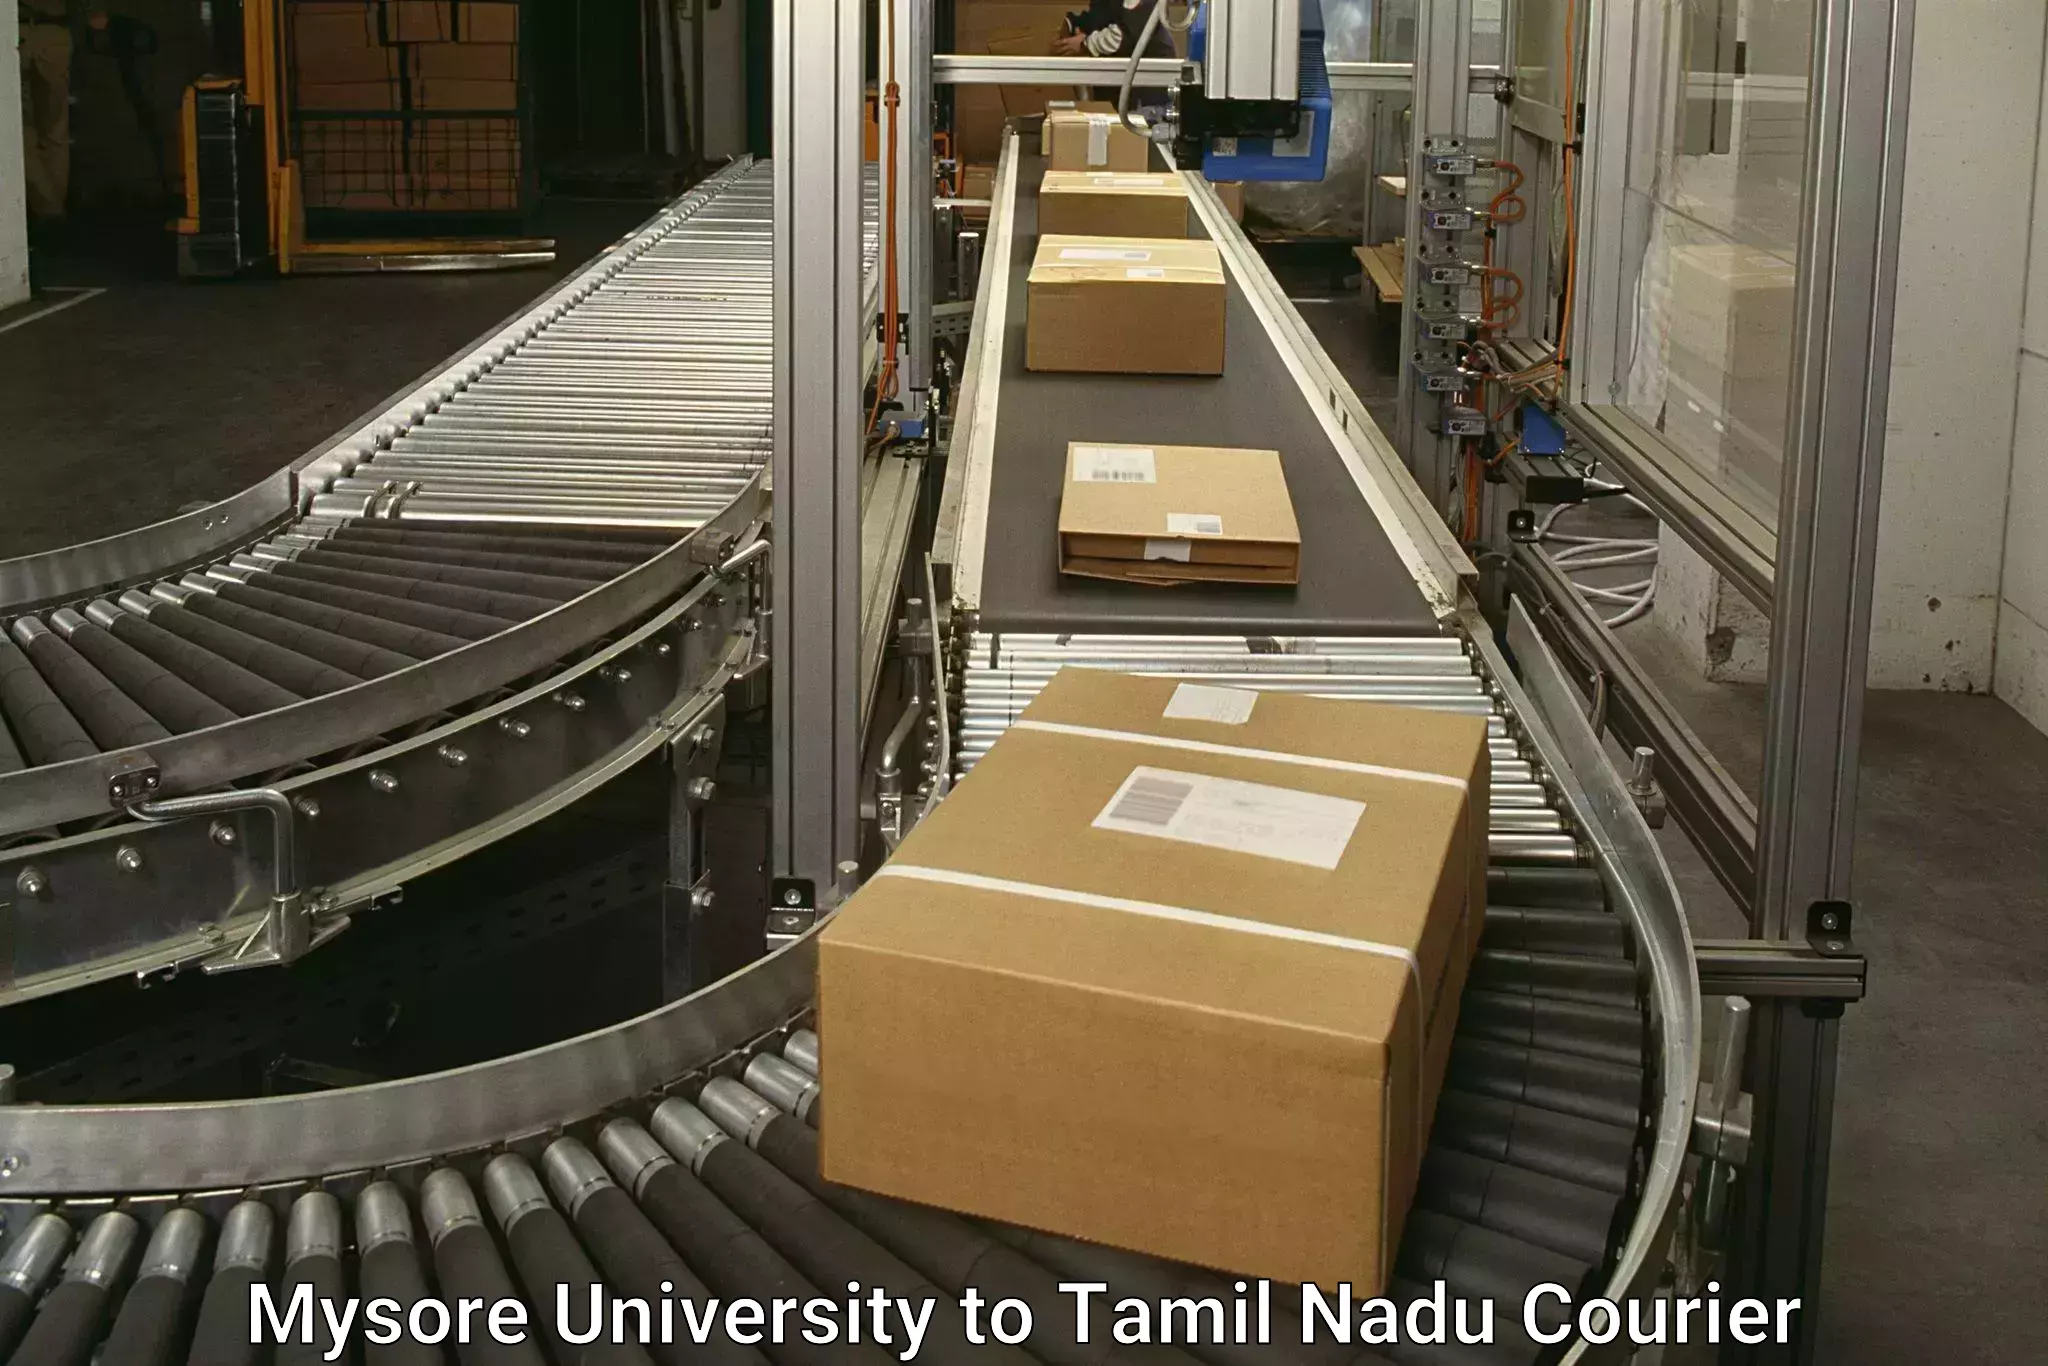 Express delivery capabilities Mysore University to Tuticorin Port